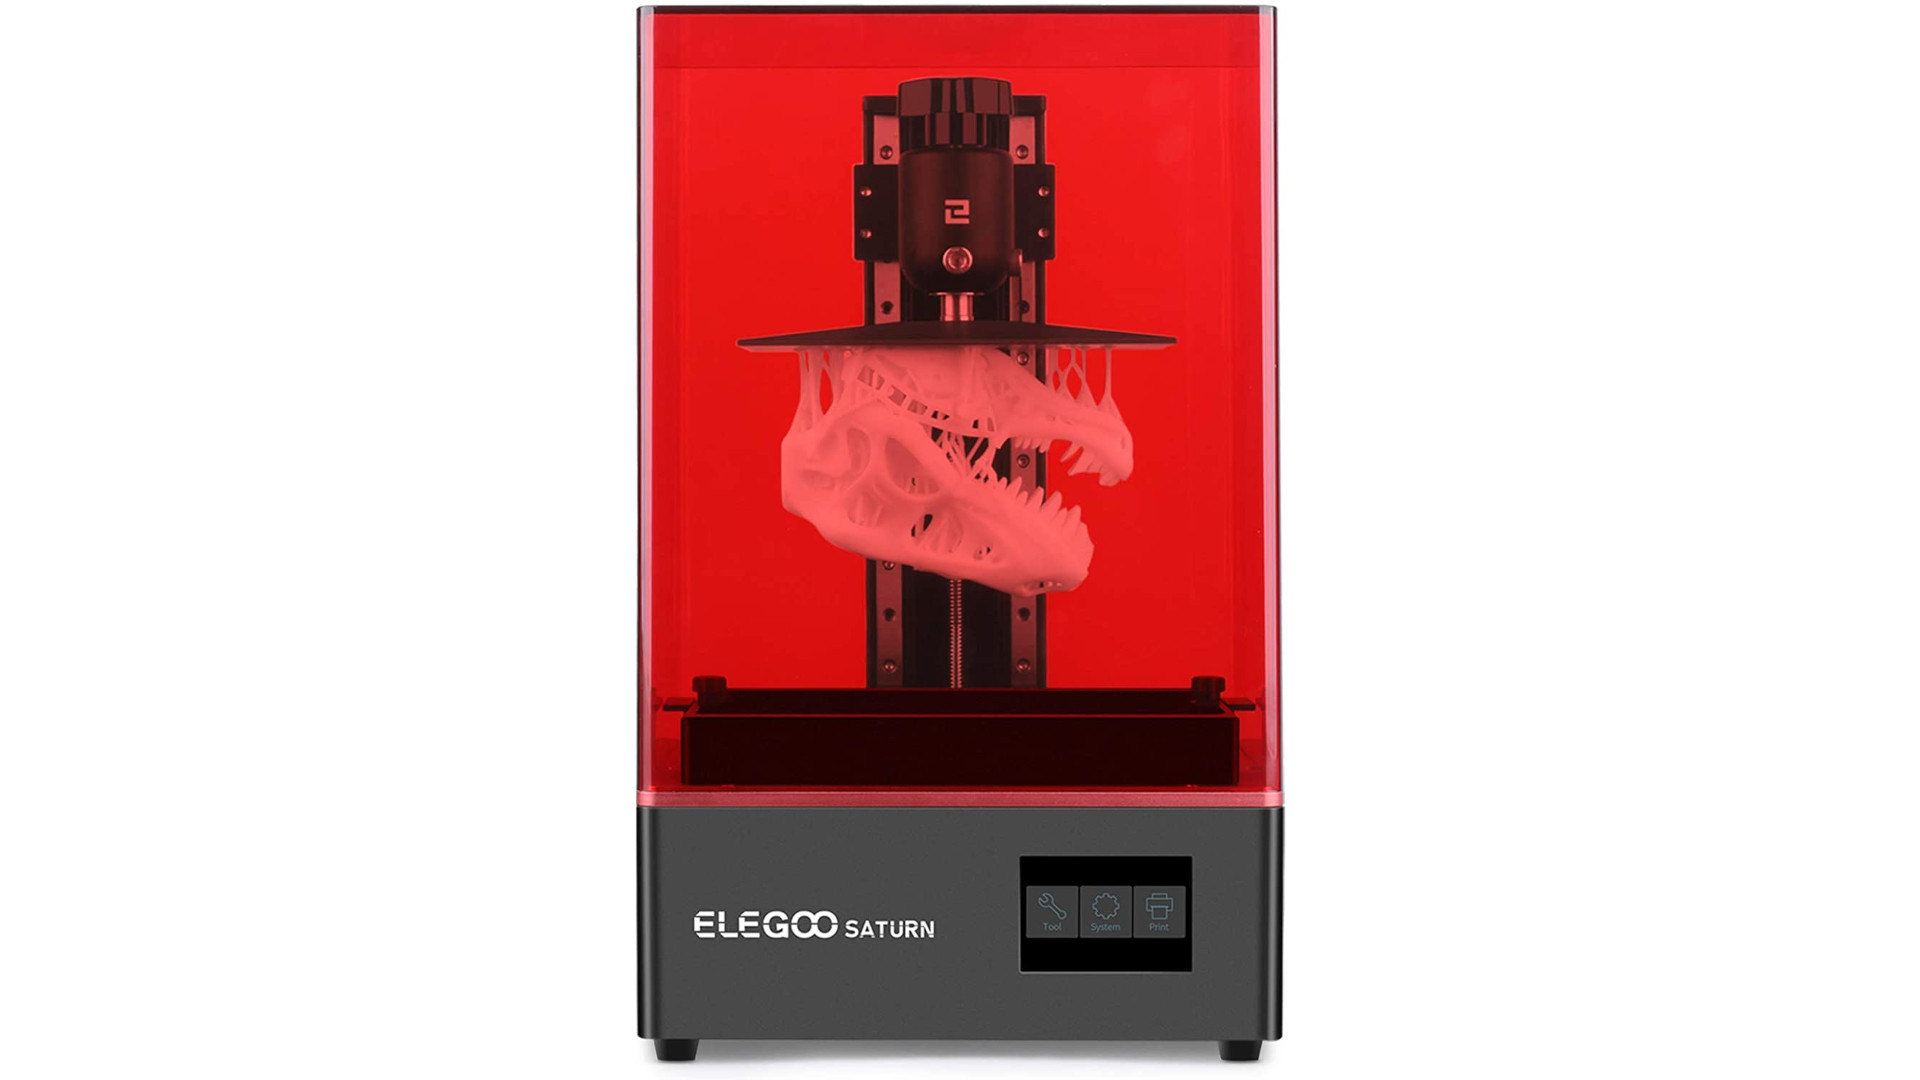 The Elegoo Saturn 3D printer against a white background